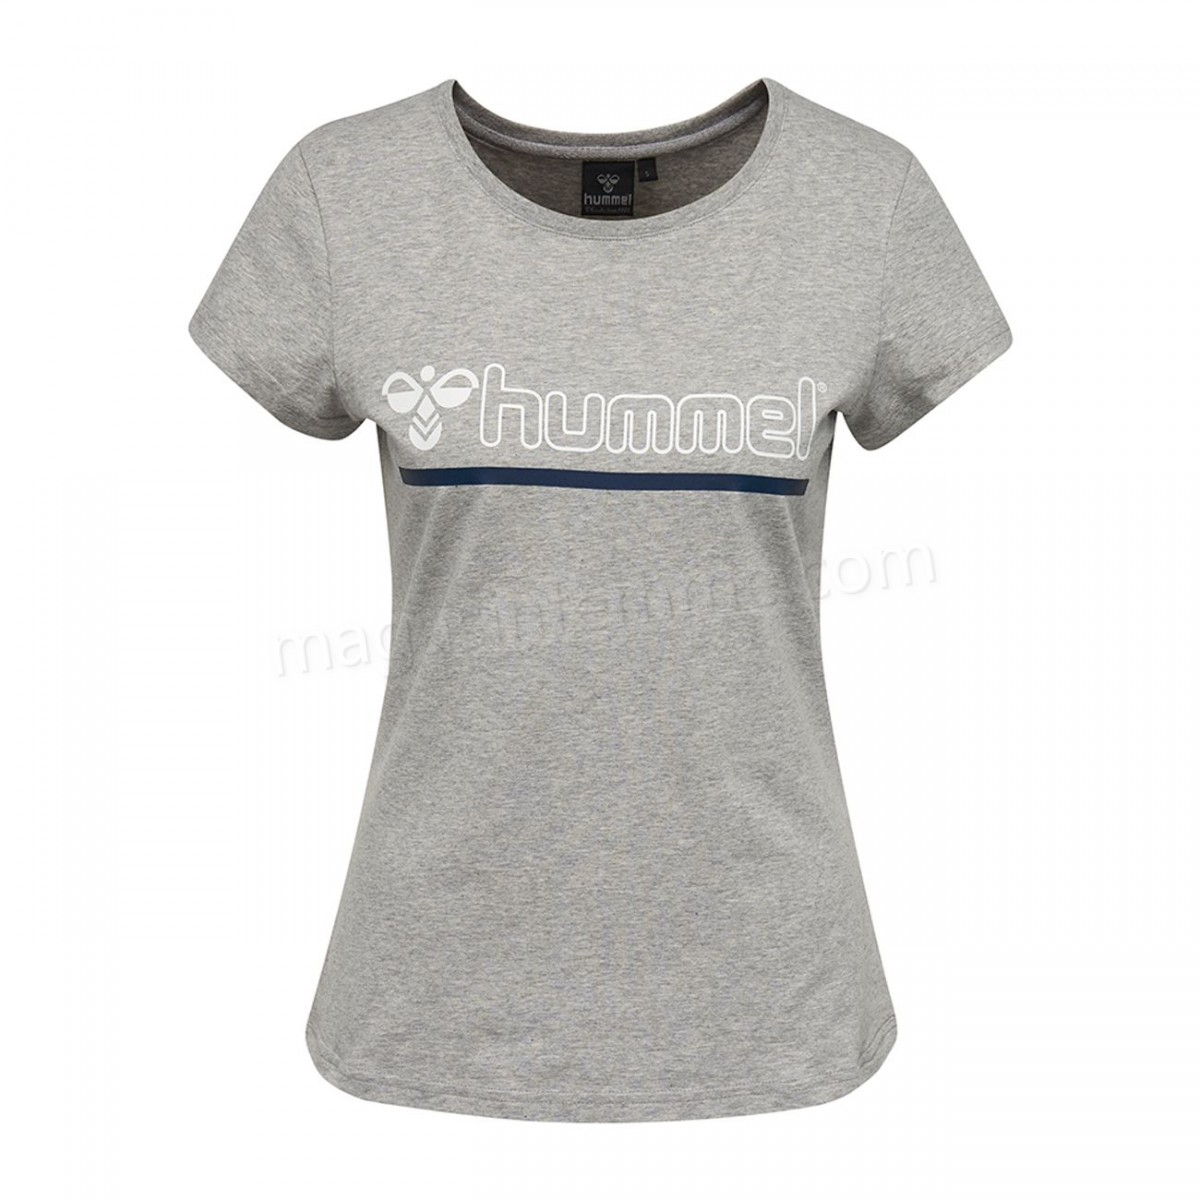 Hummel-Fitness femme HUMMEL T-shirt femme Hummel Classic bee Perla en solde - -5